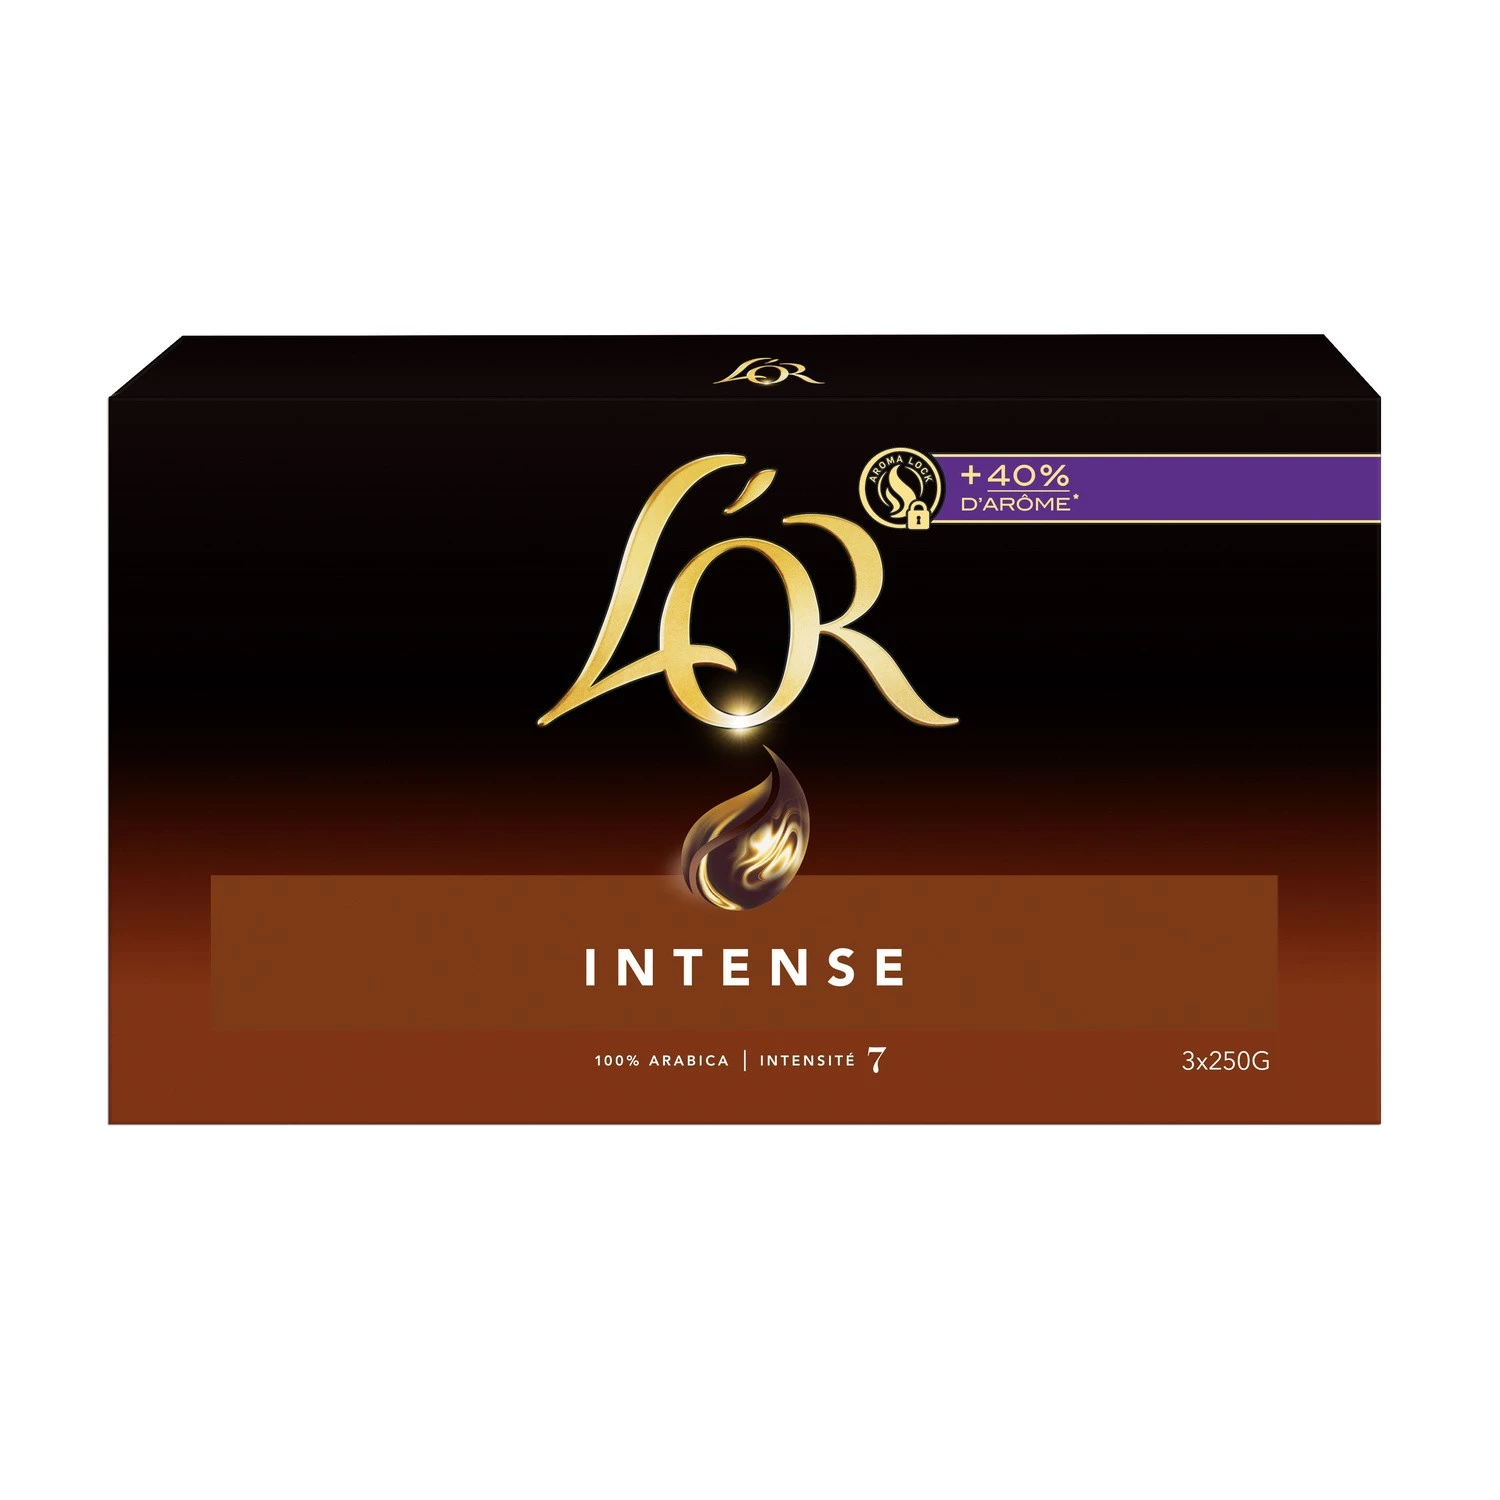 L'or Intense 3x250g